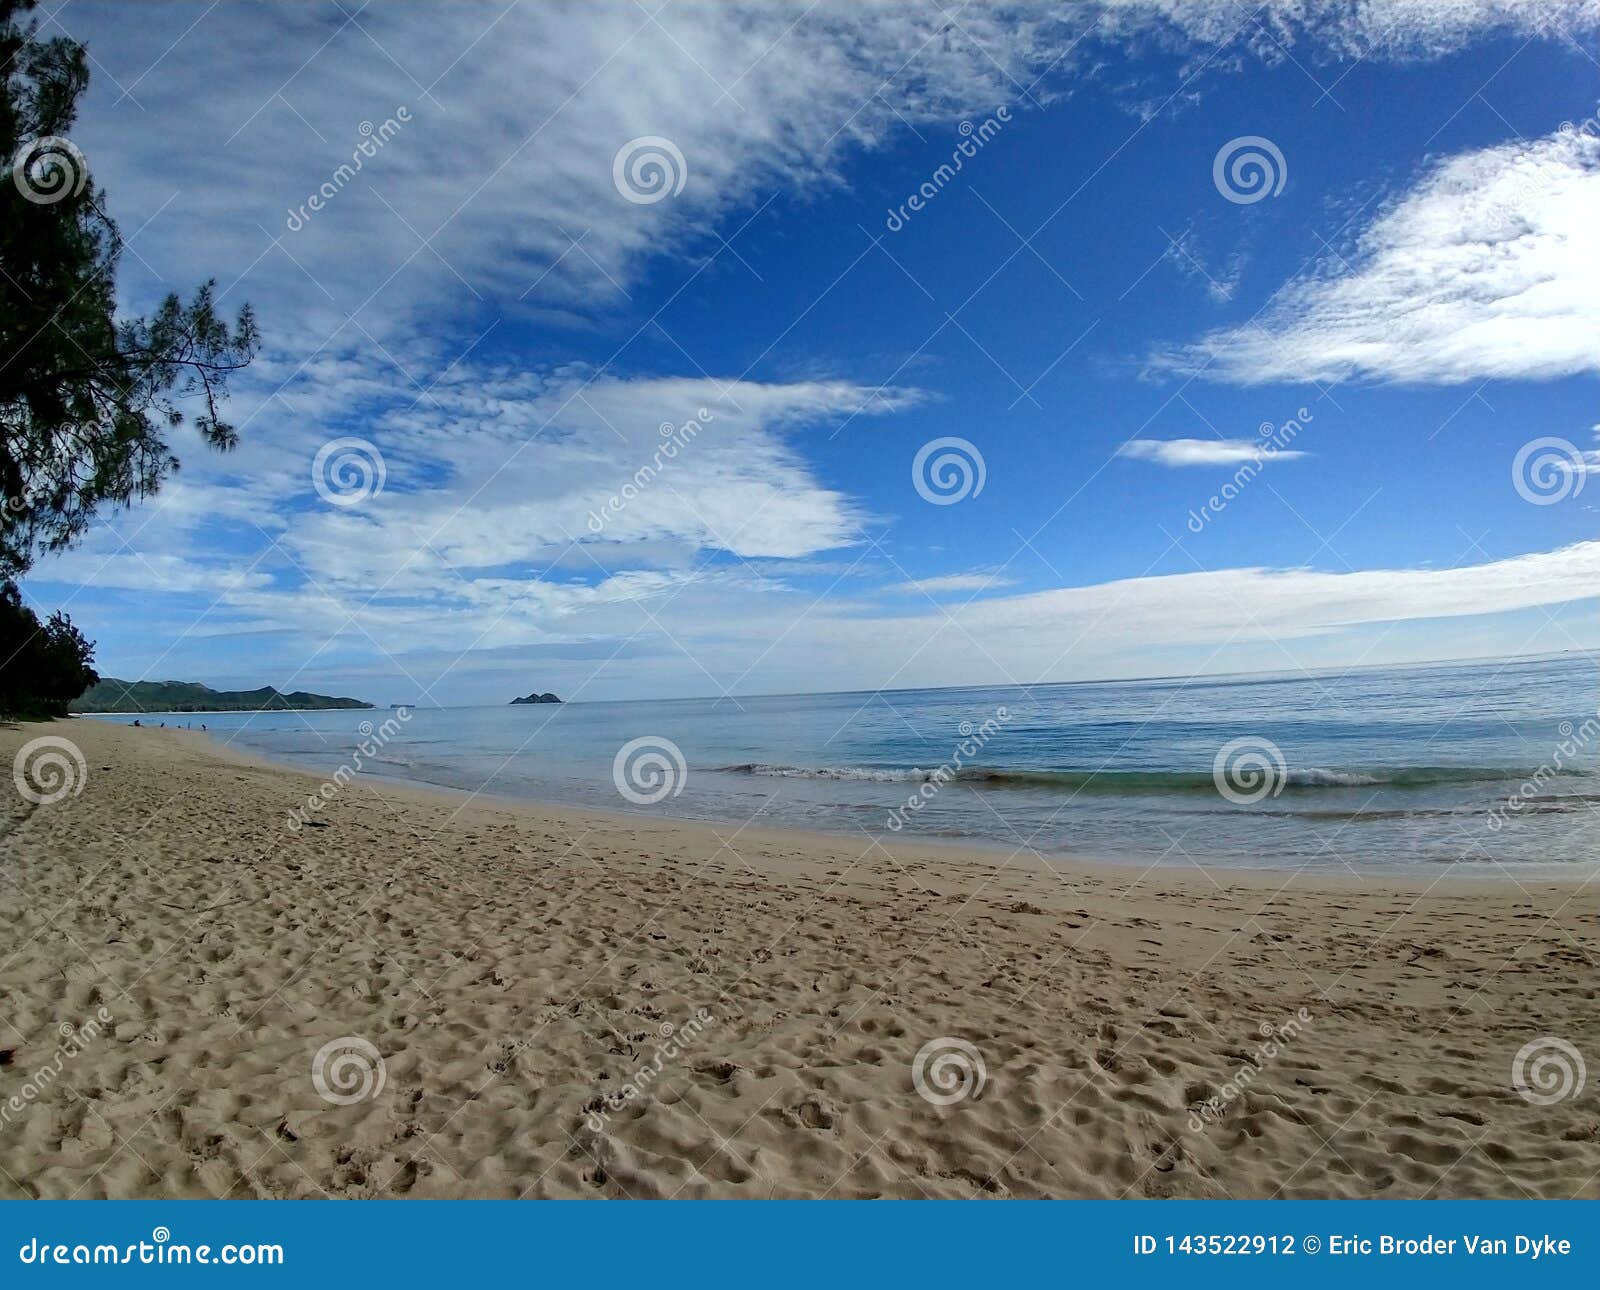 waimanalo beach looking towards mokulua islands